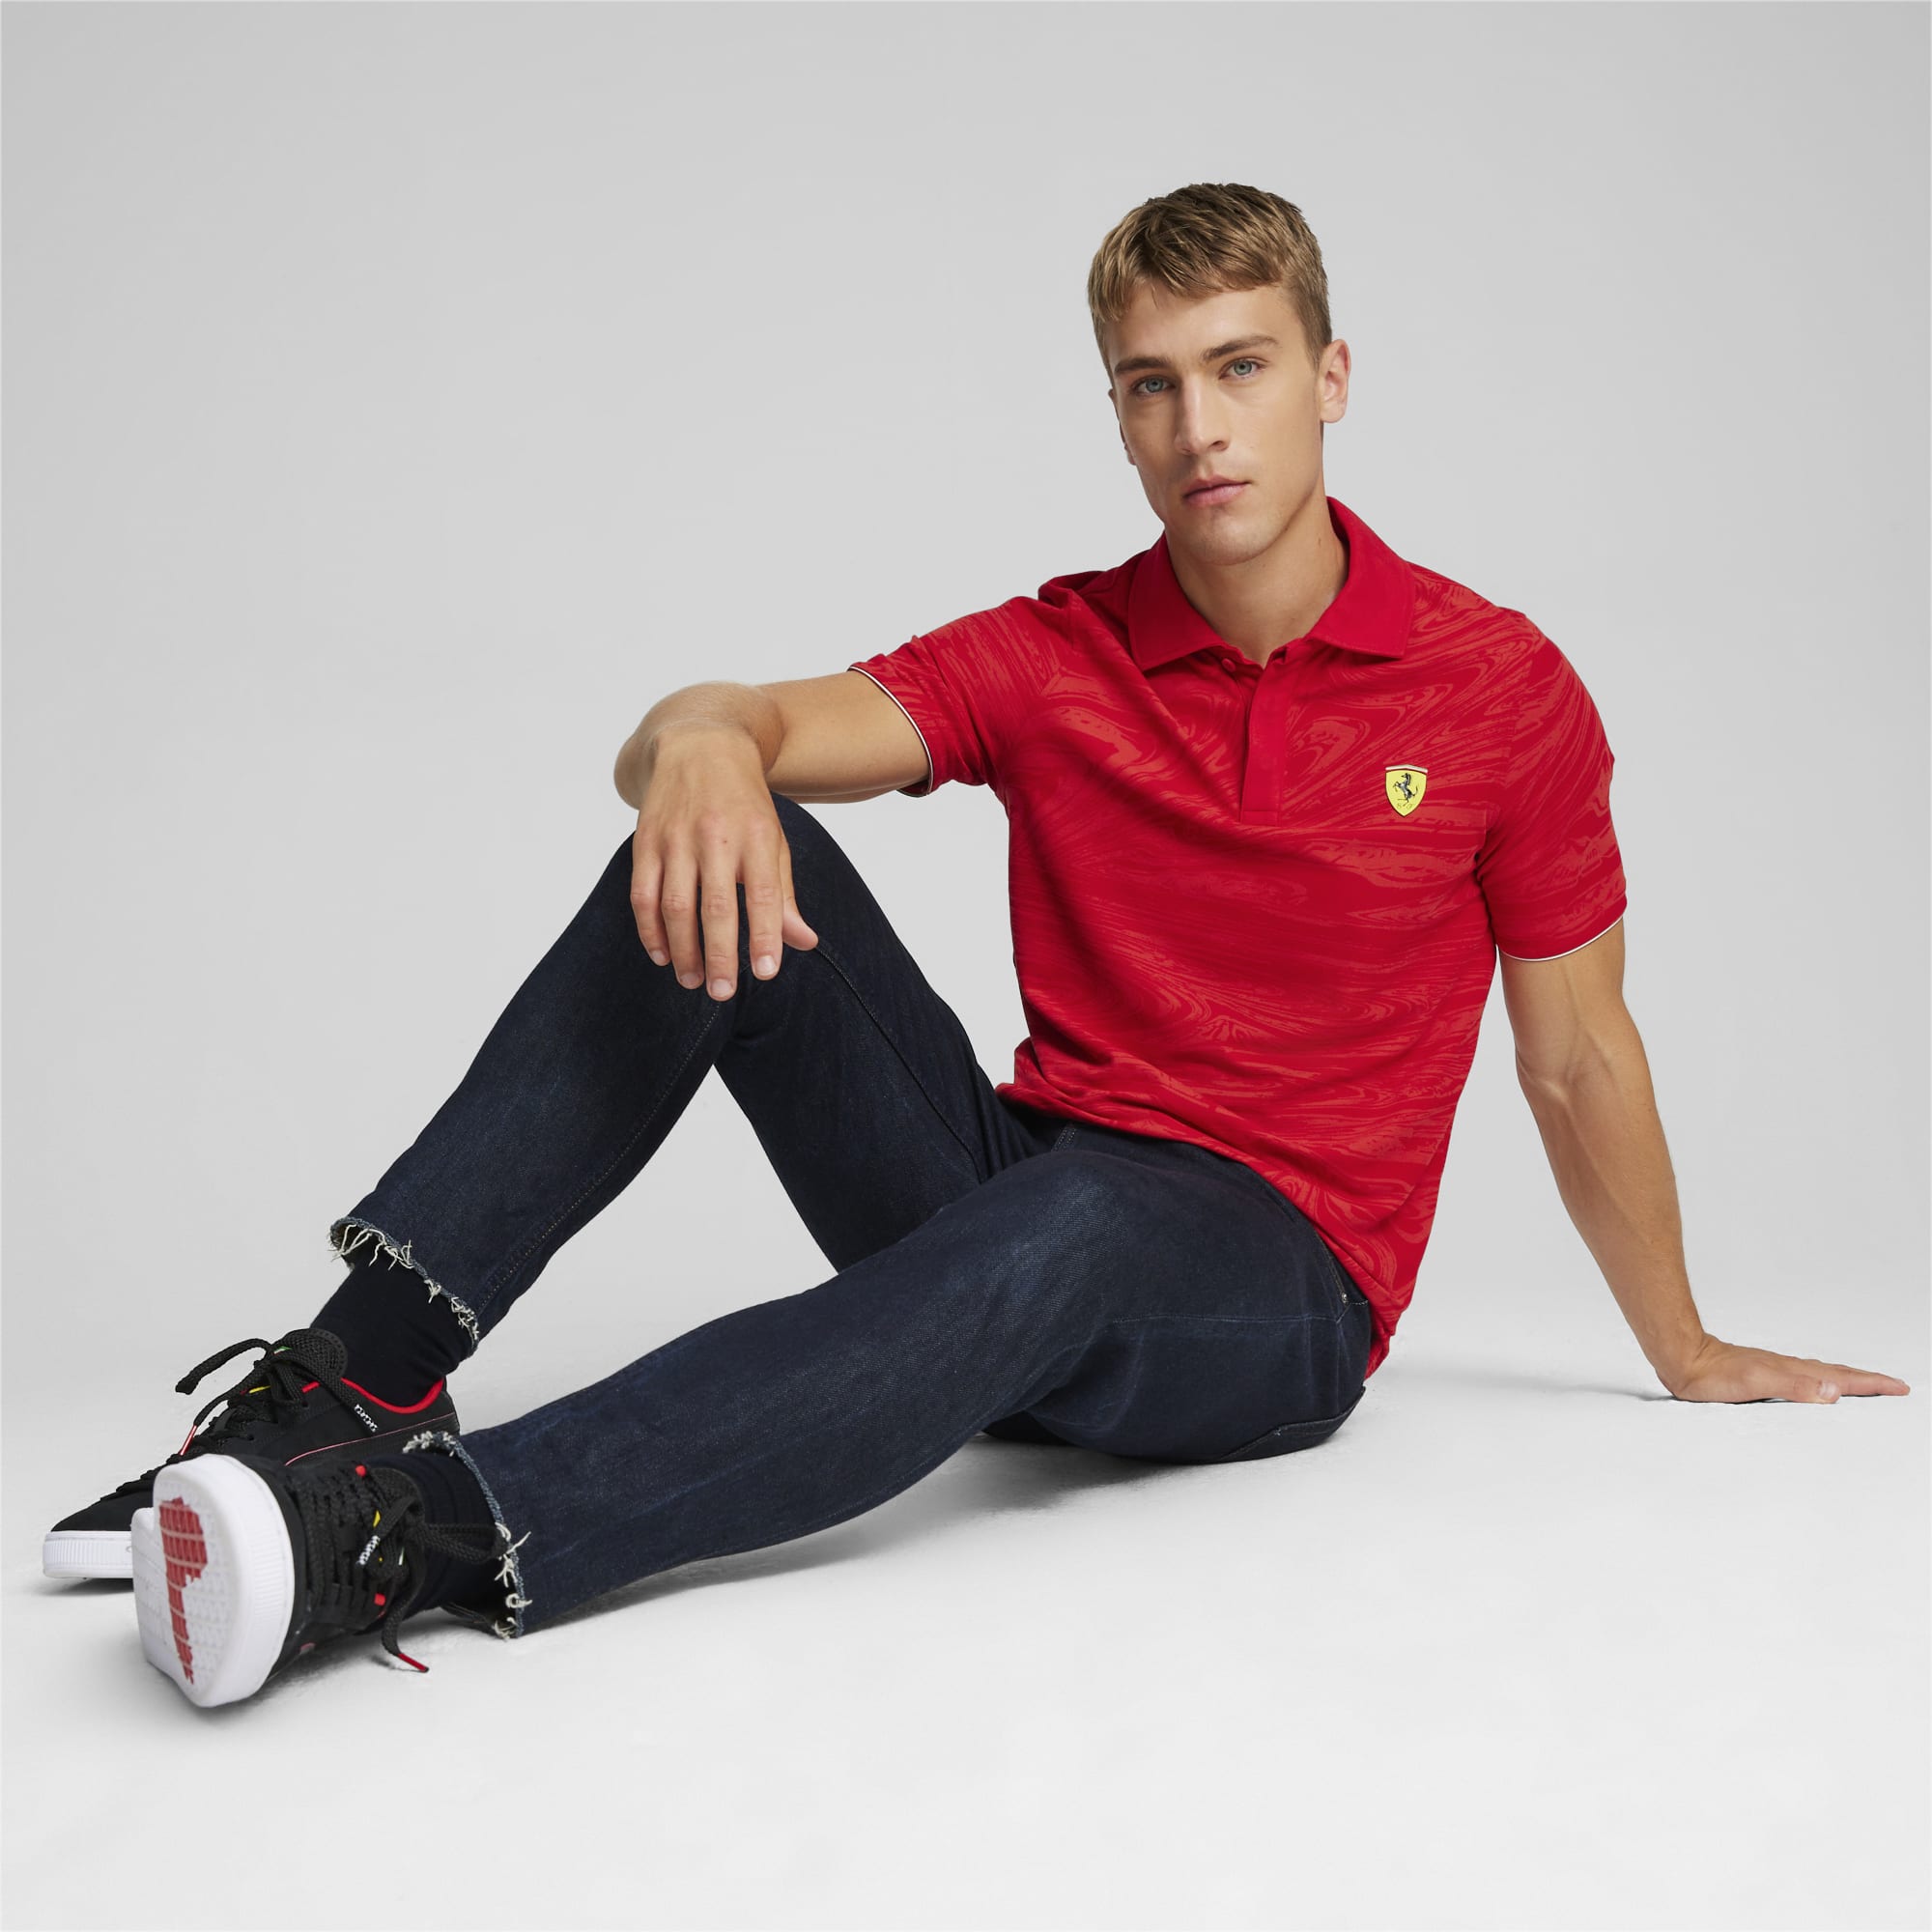 PUMA Scuderia Ferrari Race Men's Motorsport Graphic Polo Shirt, Red, Size XS, Clothing